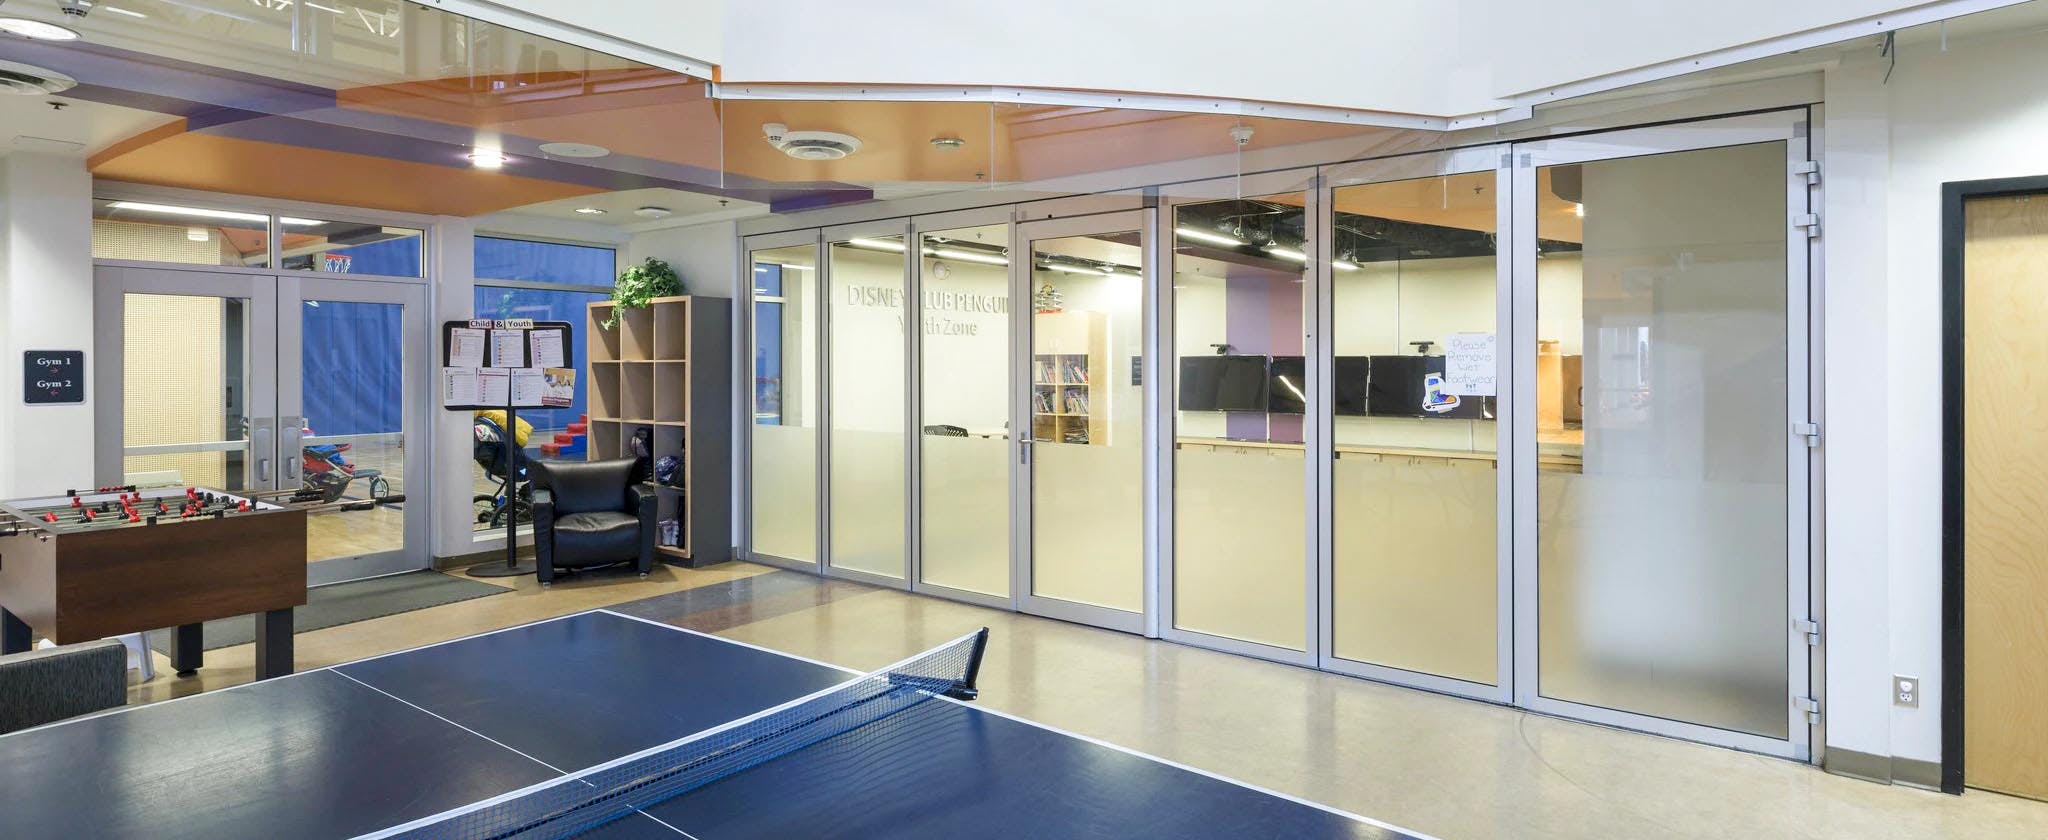 game room near aluminum framed moveable interior glass doors at community center